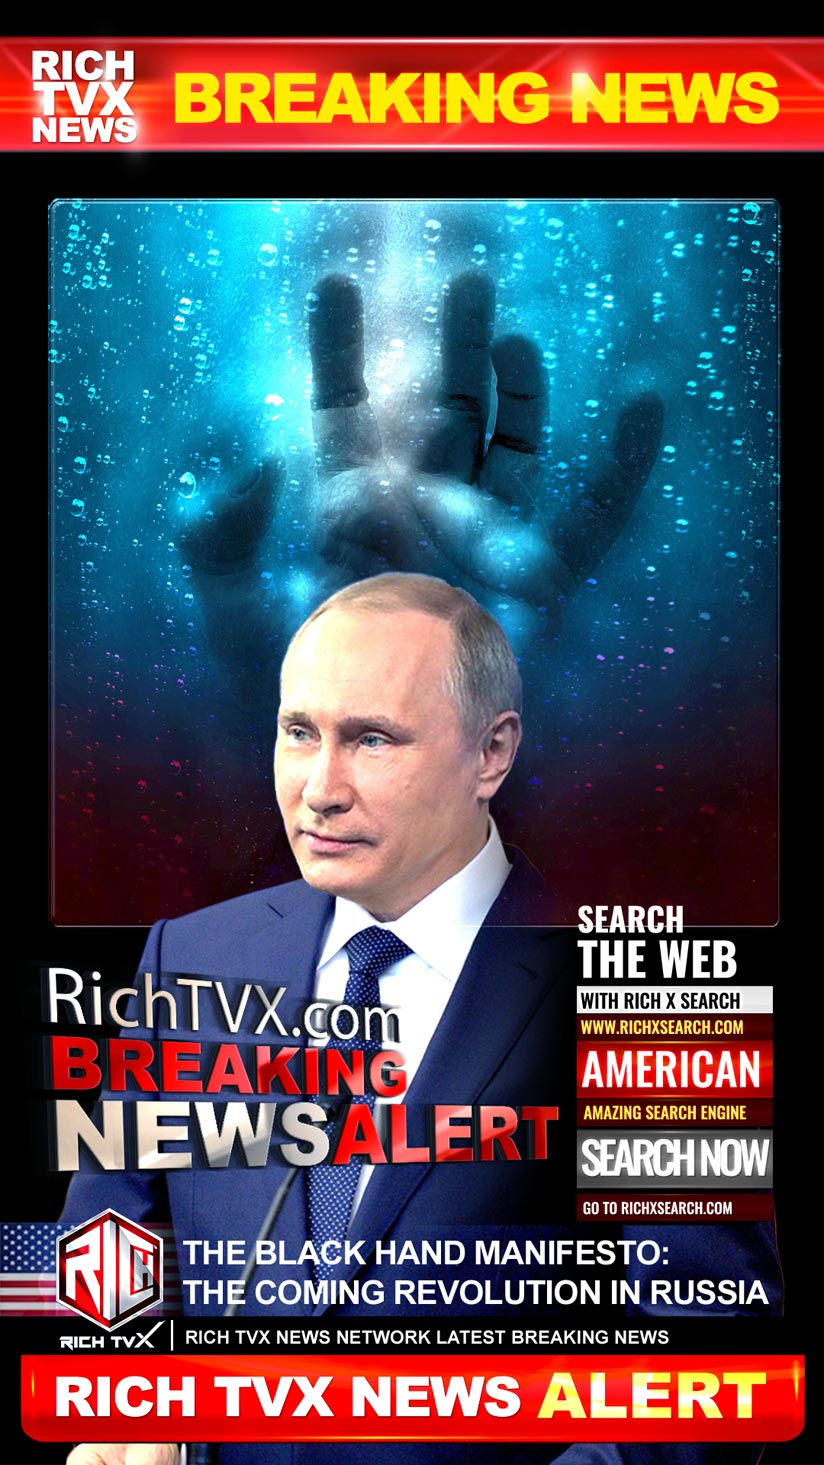 The Black Hand Manifesto: The Coming Revolution in Russia